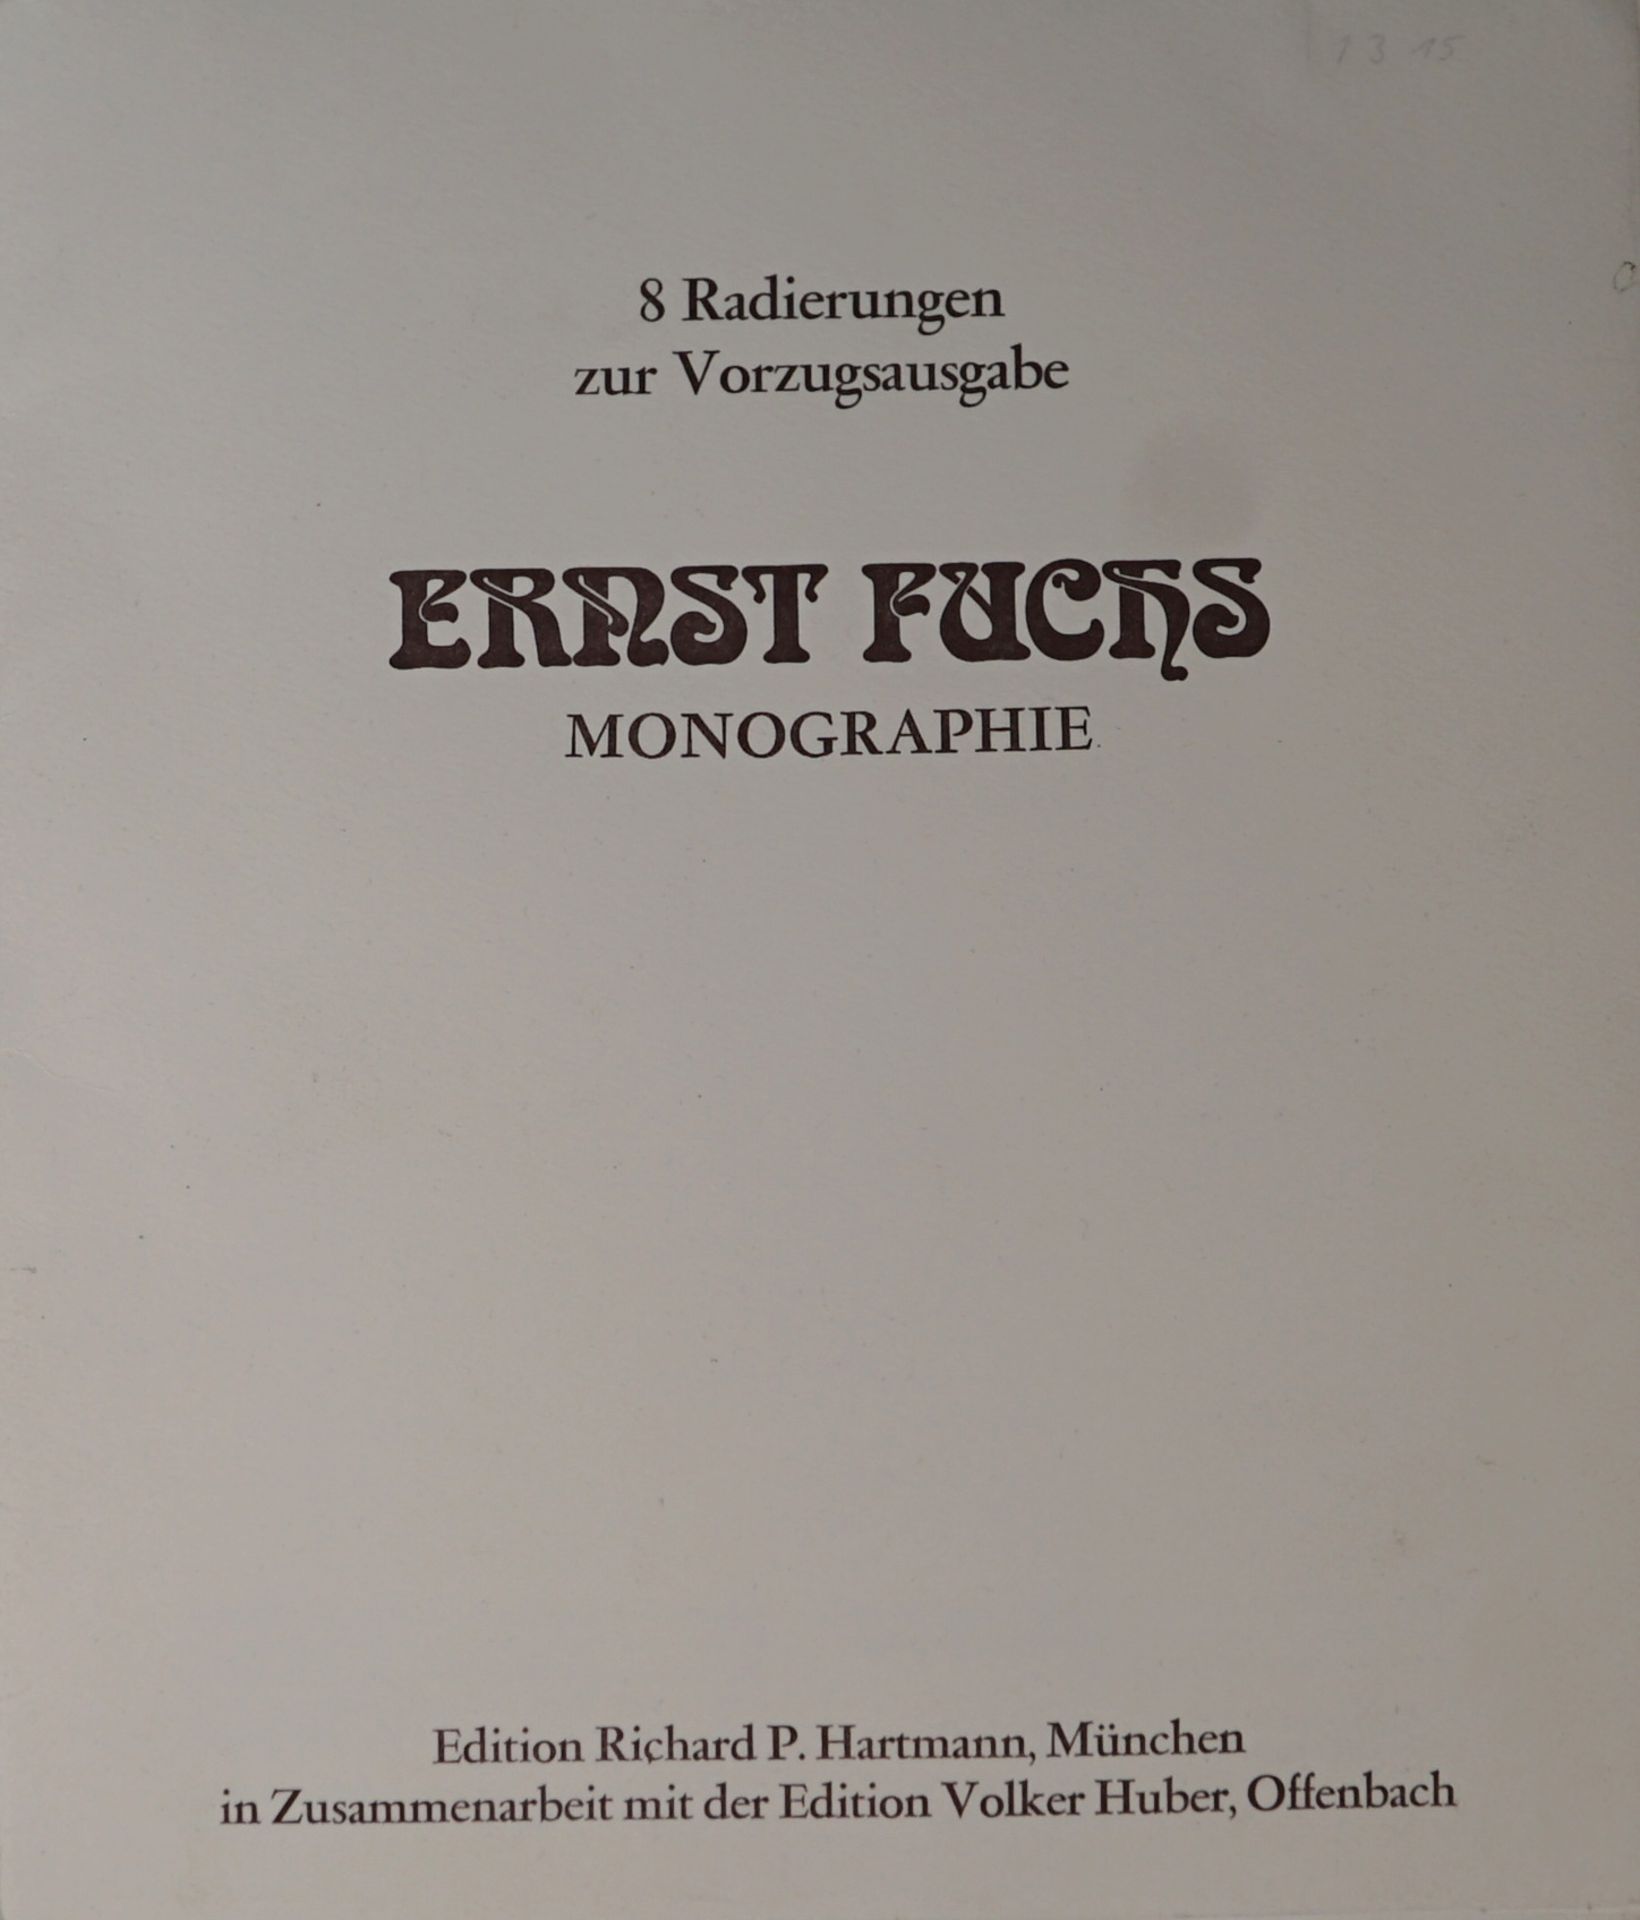 Fuchs, Ernst: Monographie - Image 2 of 2